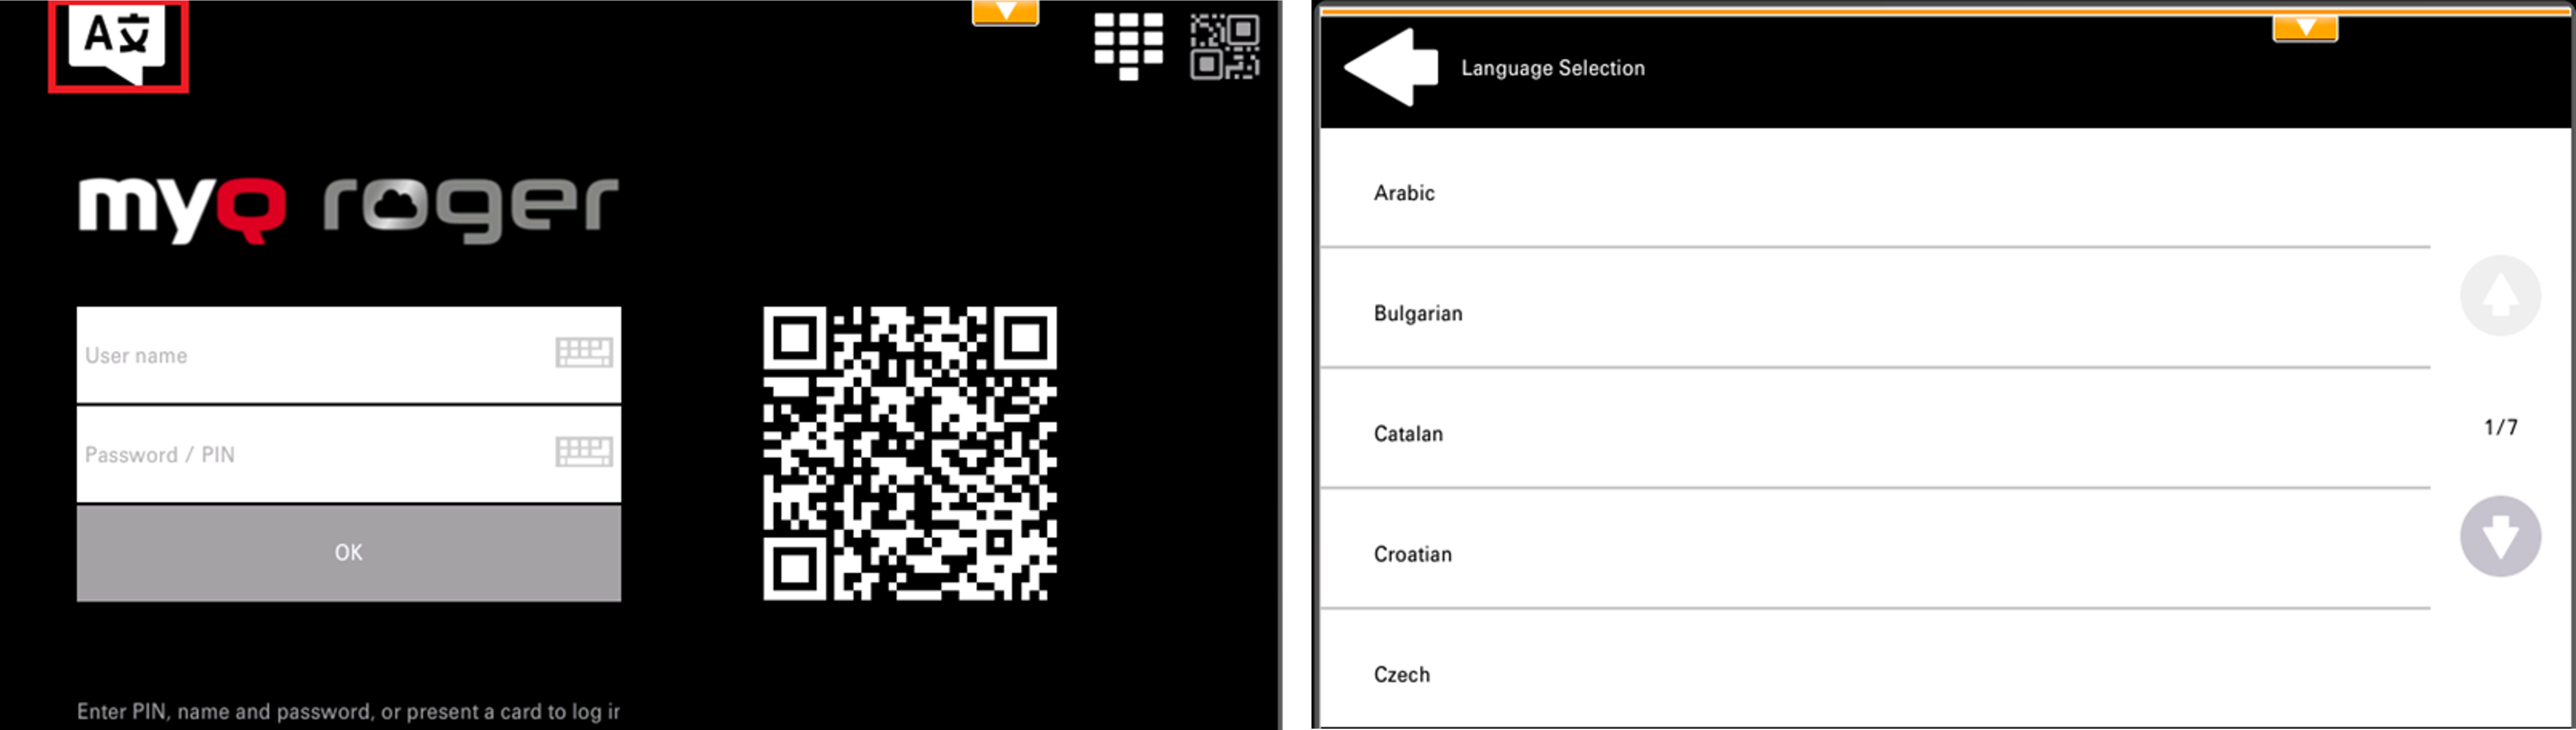 Language selection on the Top menu login screen